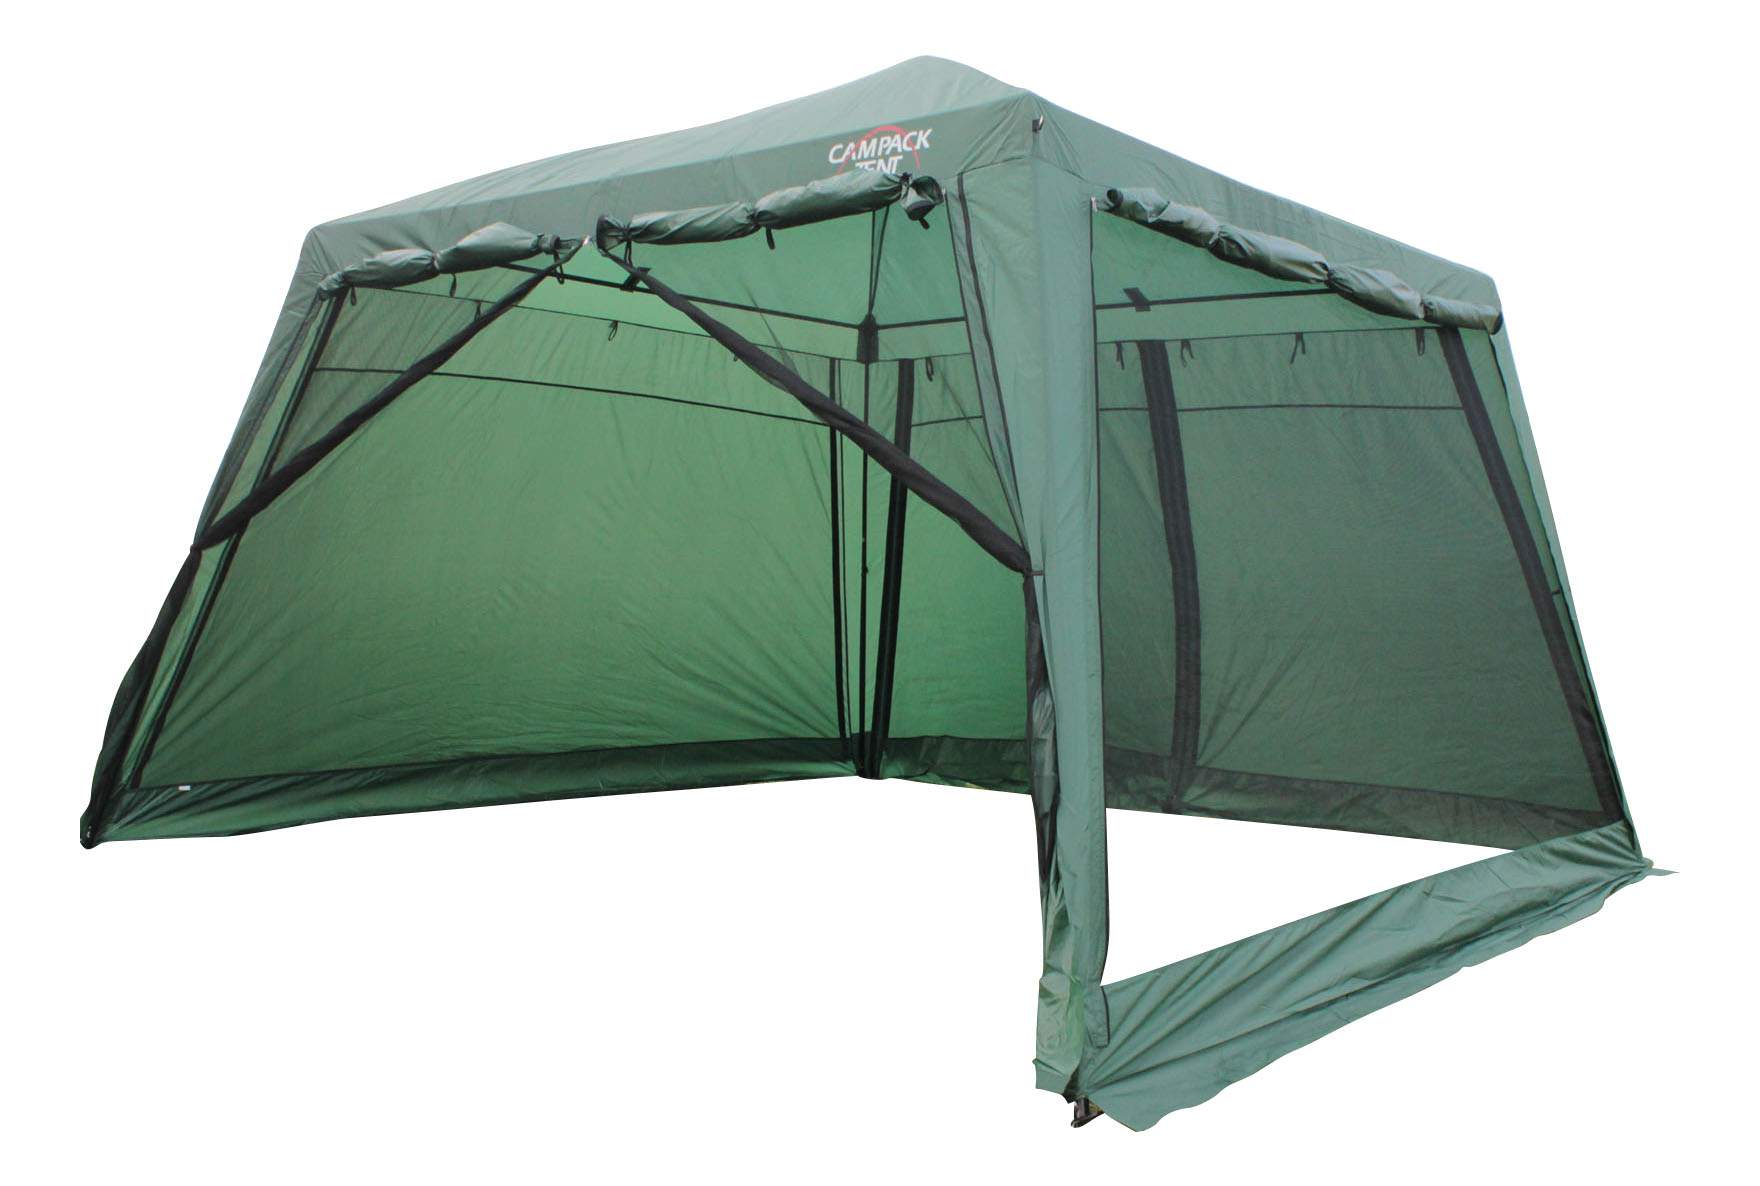 Палатка компакт. Campack Tent g-3001w. Шатер Campack Tent g-3001w. Тент Campack Tent g-3001. Шатер кухня Campack Tent g 3001w.